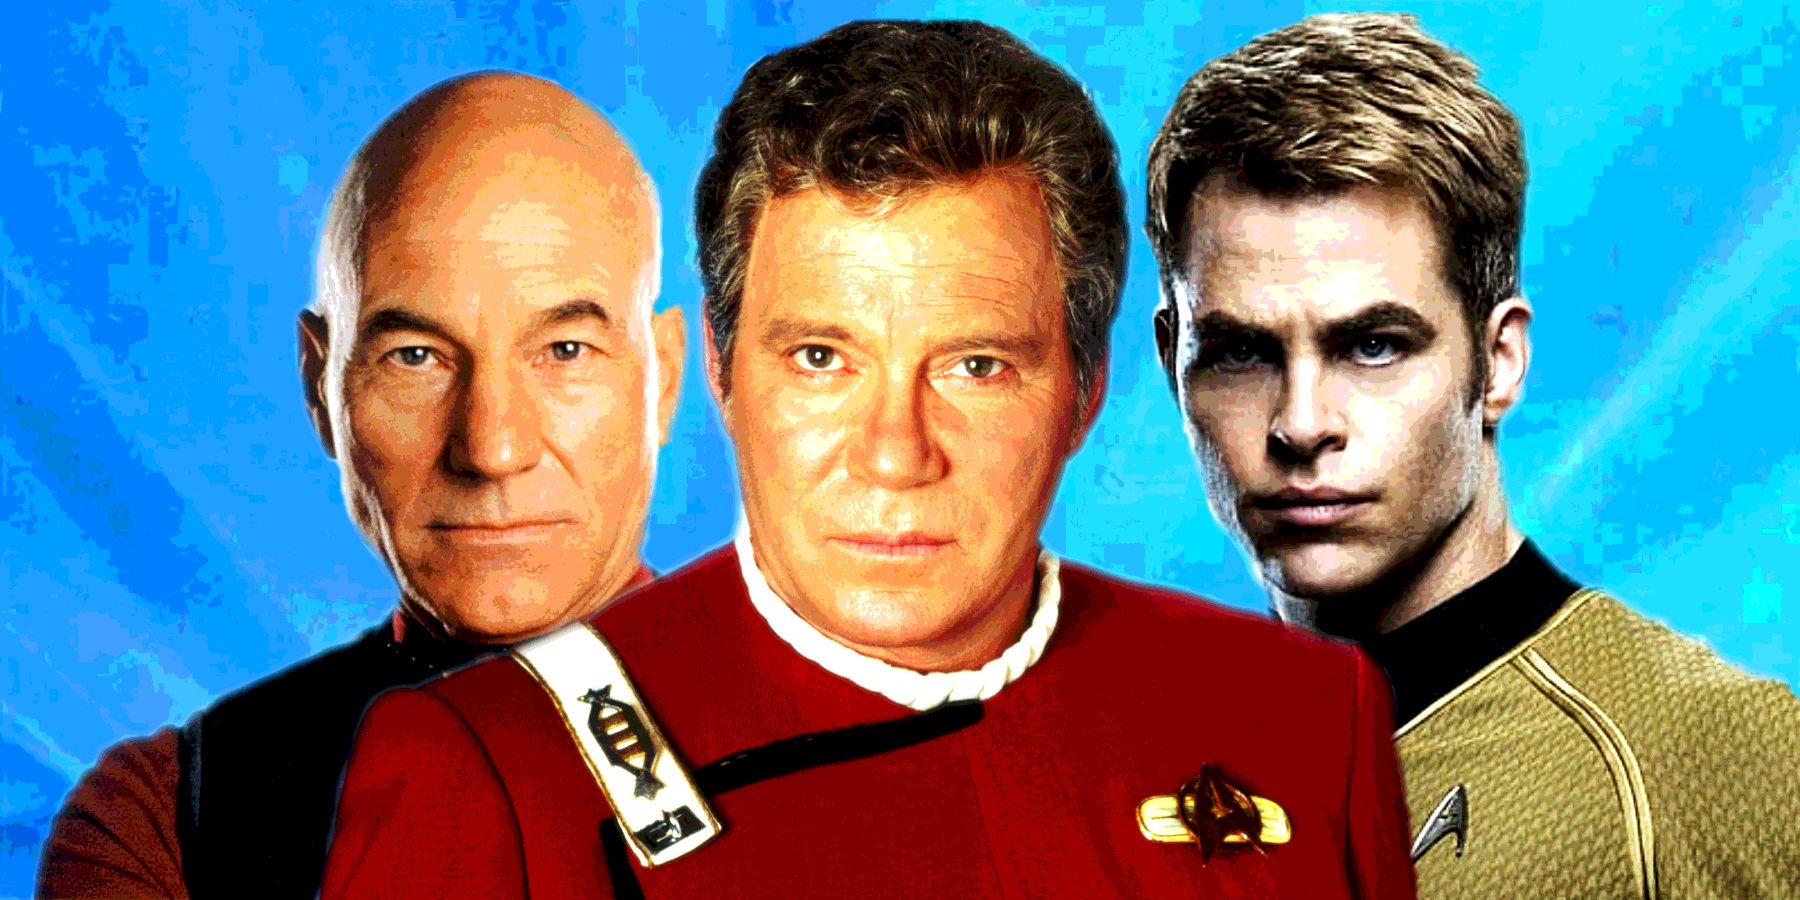 William Shatner, Patrick Stewart and Chris Pine in Star Trek